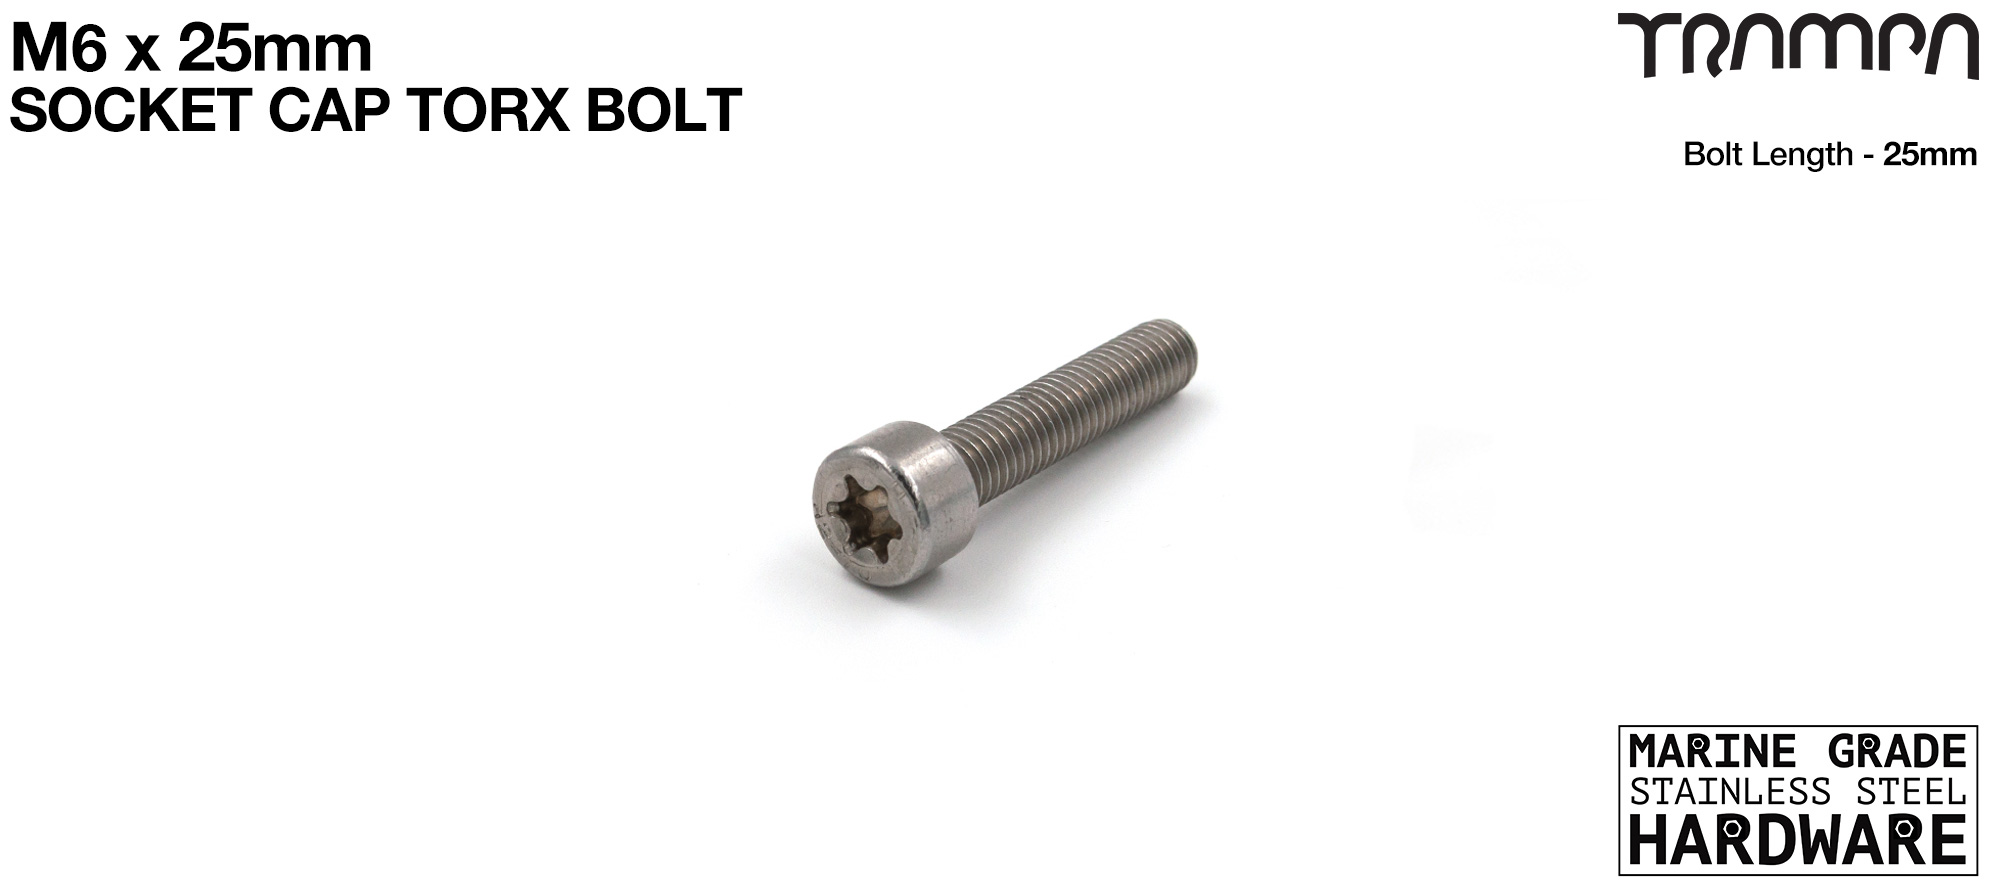 M6 x 25mm TORX Socket Capped TORX Head Bolt ISO 4762 Marine Grade Stainless Steel 